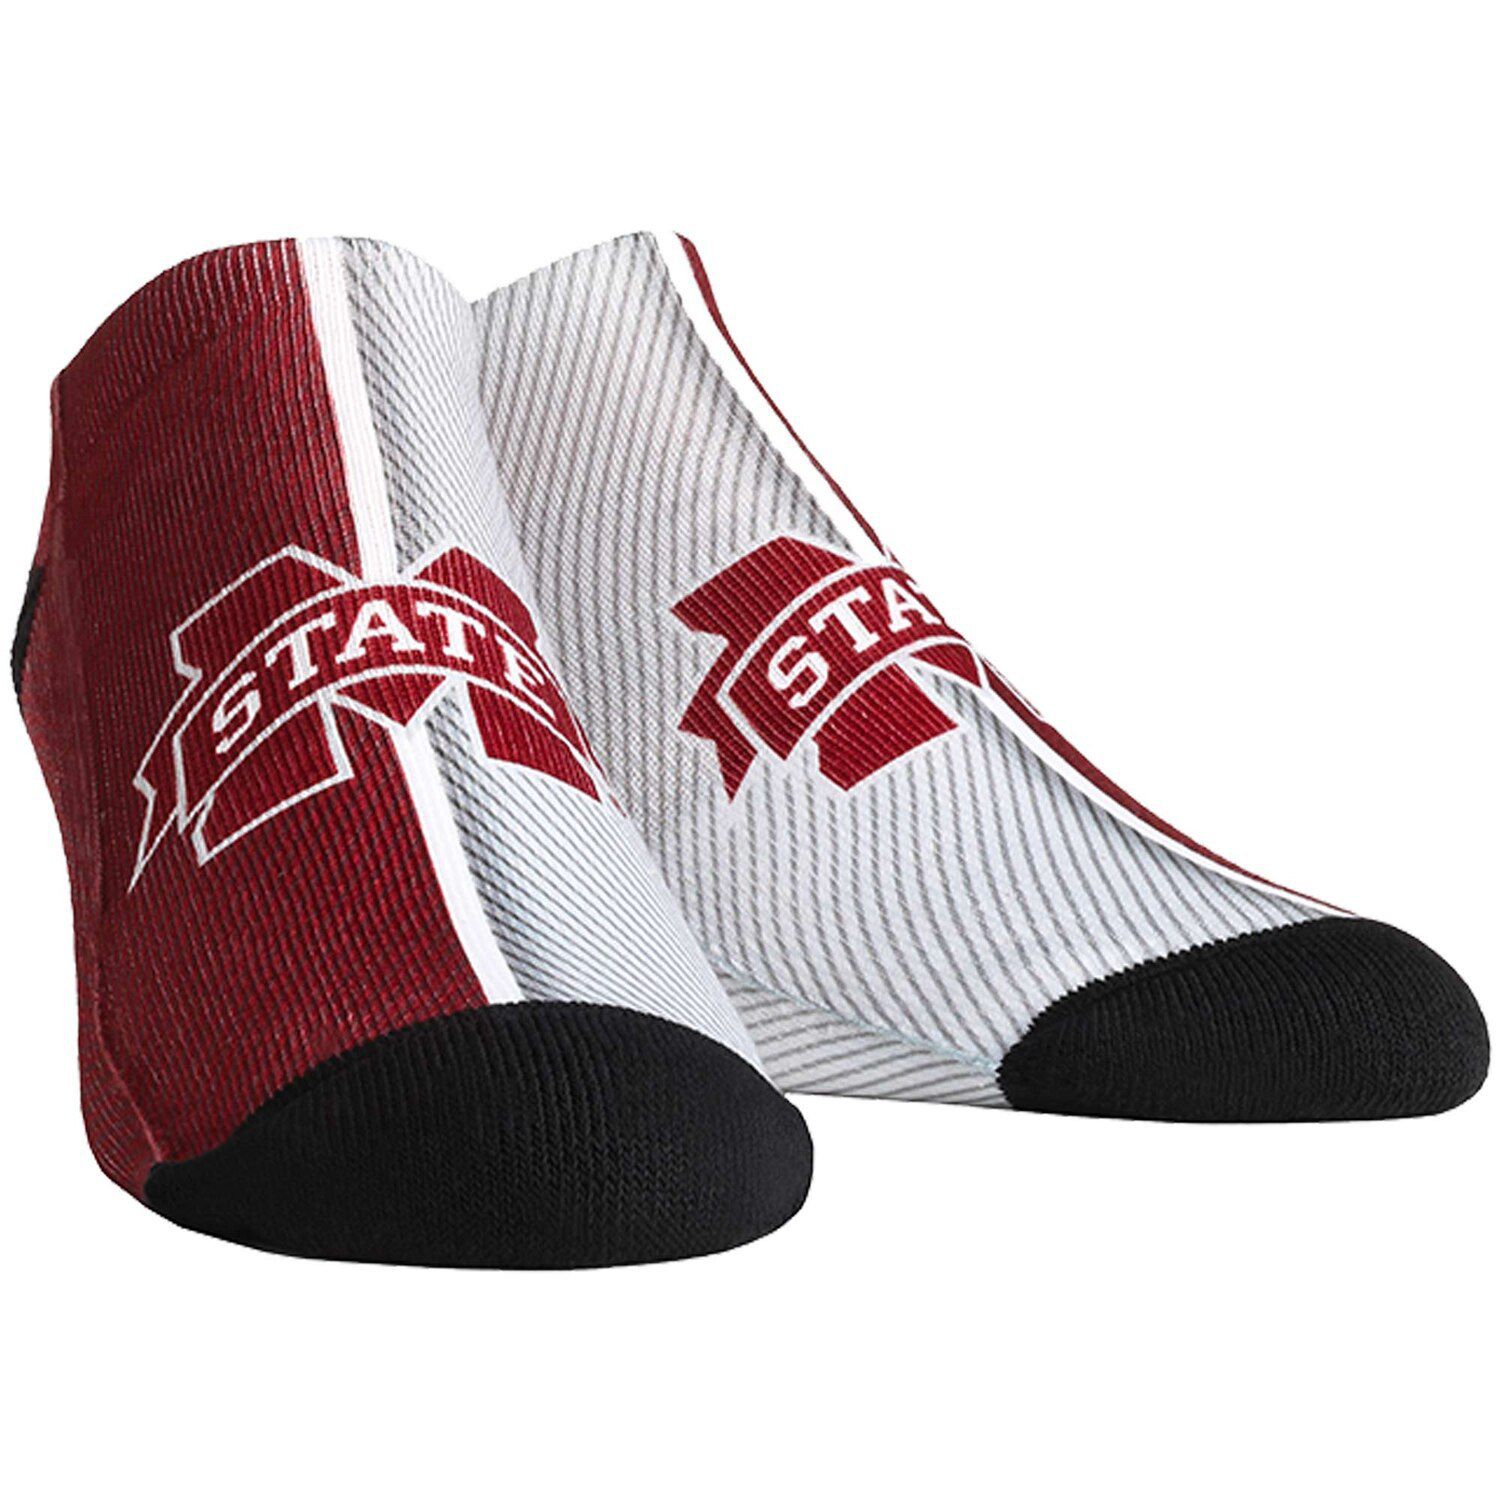 Image for Unbranded Men's Mississippi State Bulldogs Campus Stripe Ankle Socks at Kohl's.